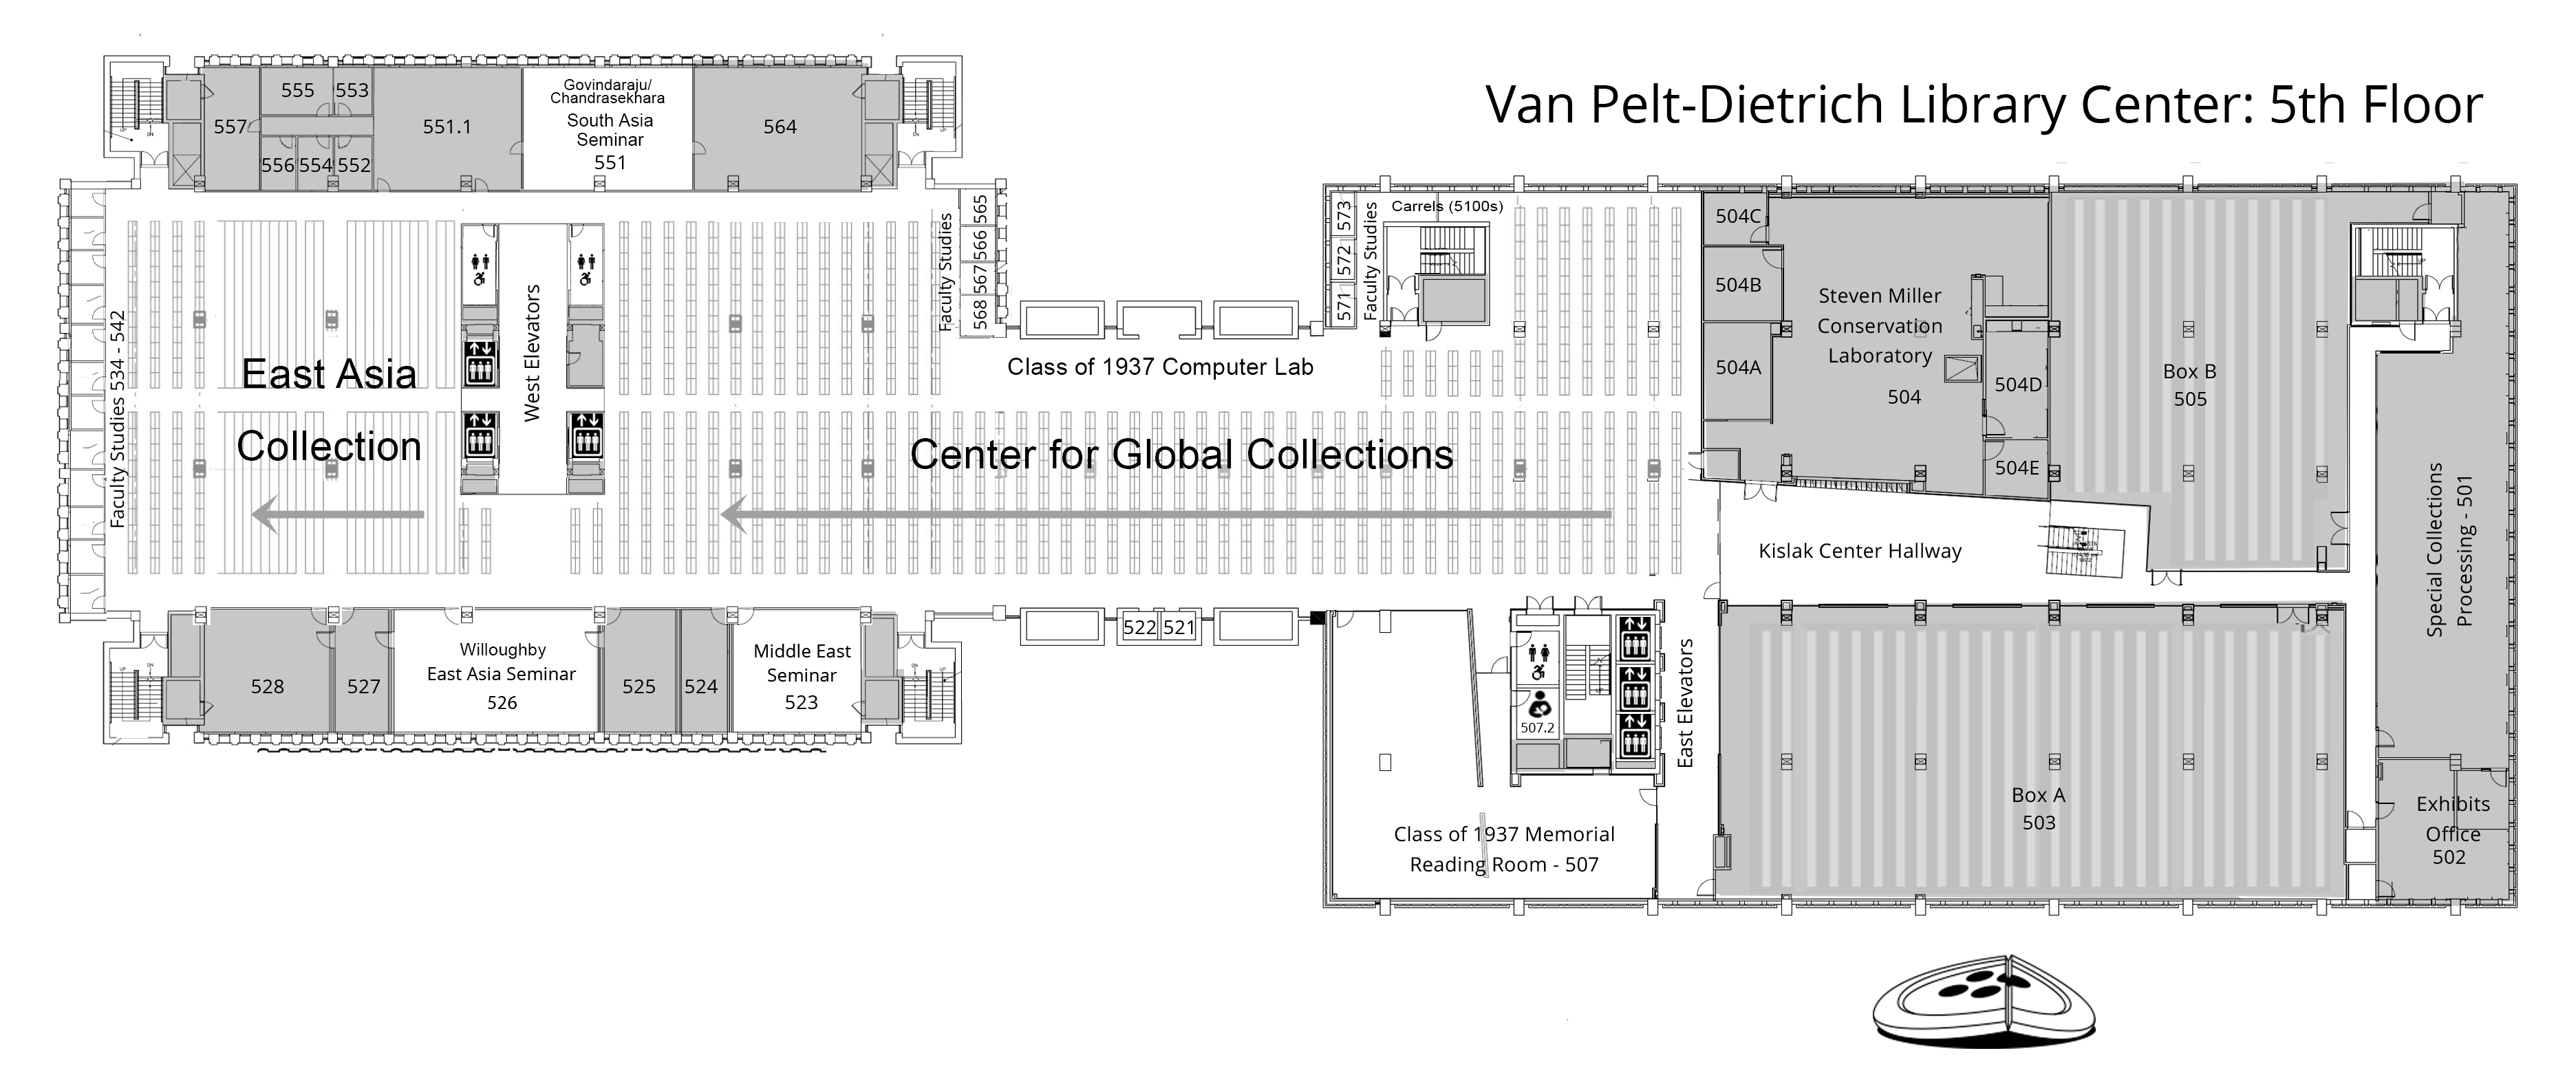 fifth floor plan, Van Pelt-Dietrich Library Center. Full description is linked below.